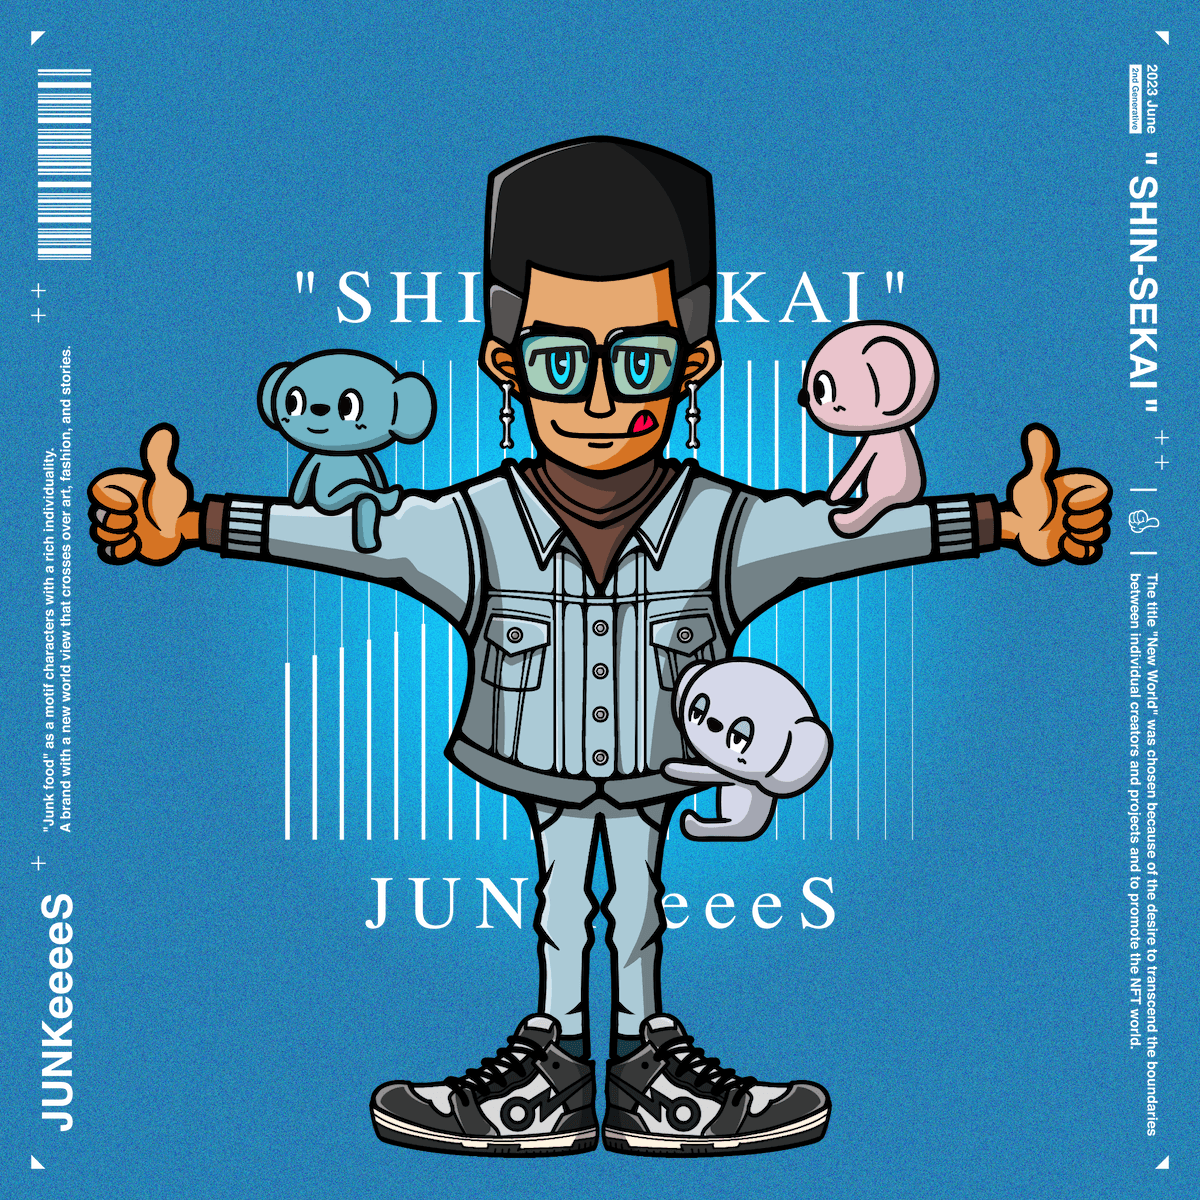 SHINSEKAI #0004